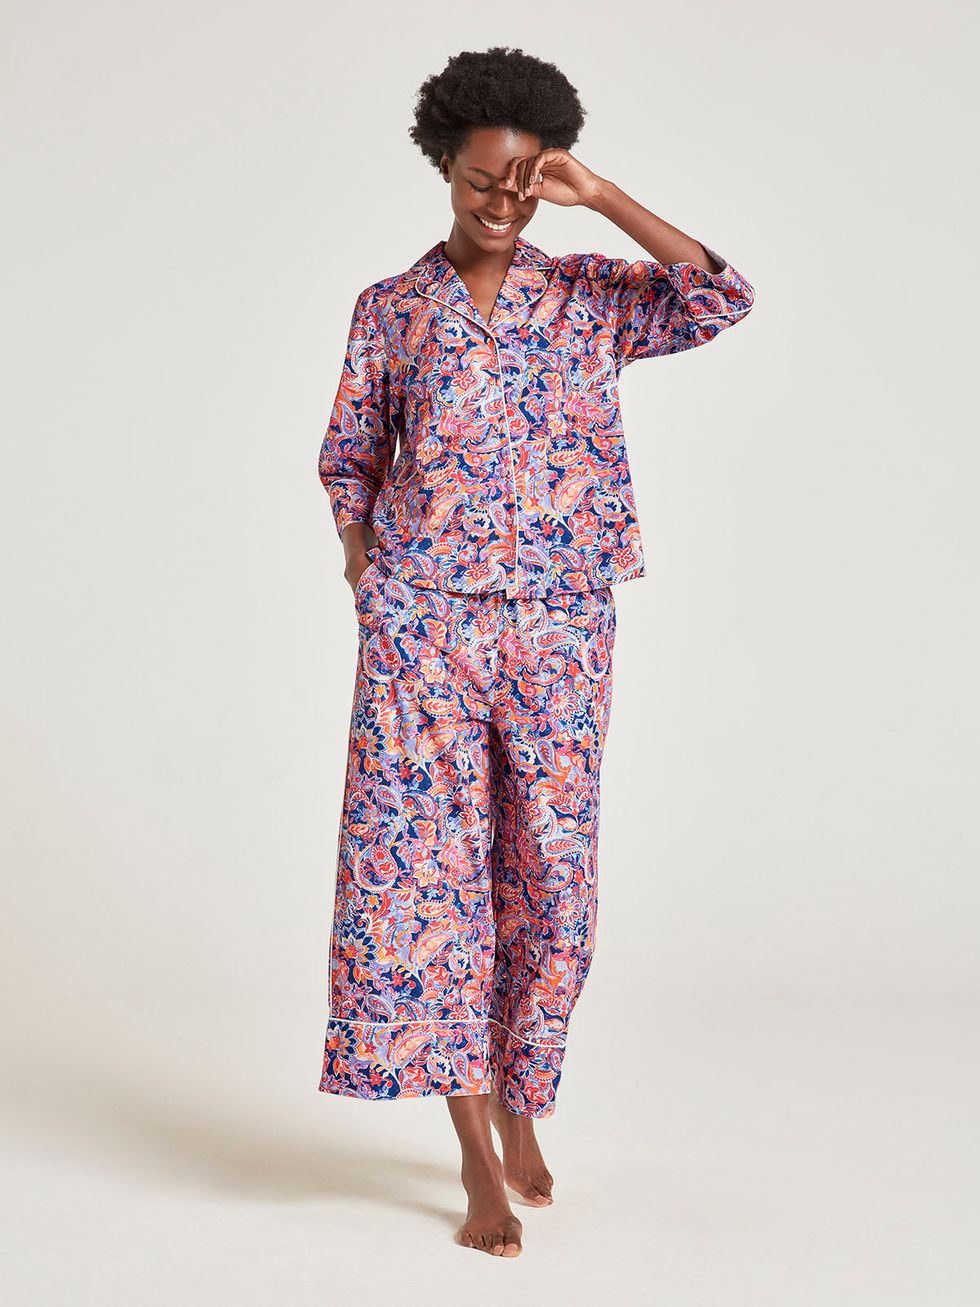 for pyjamas: great cotton cotton Ladies\' sleep nights a Best PJs